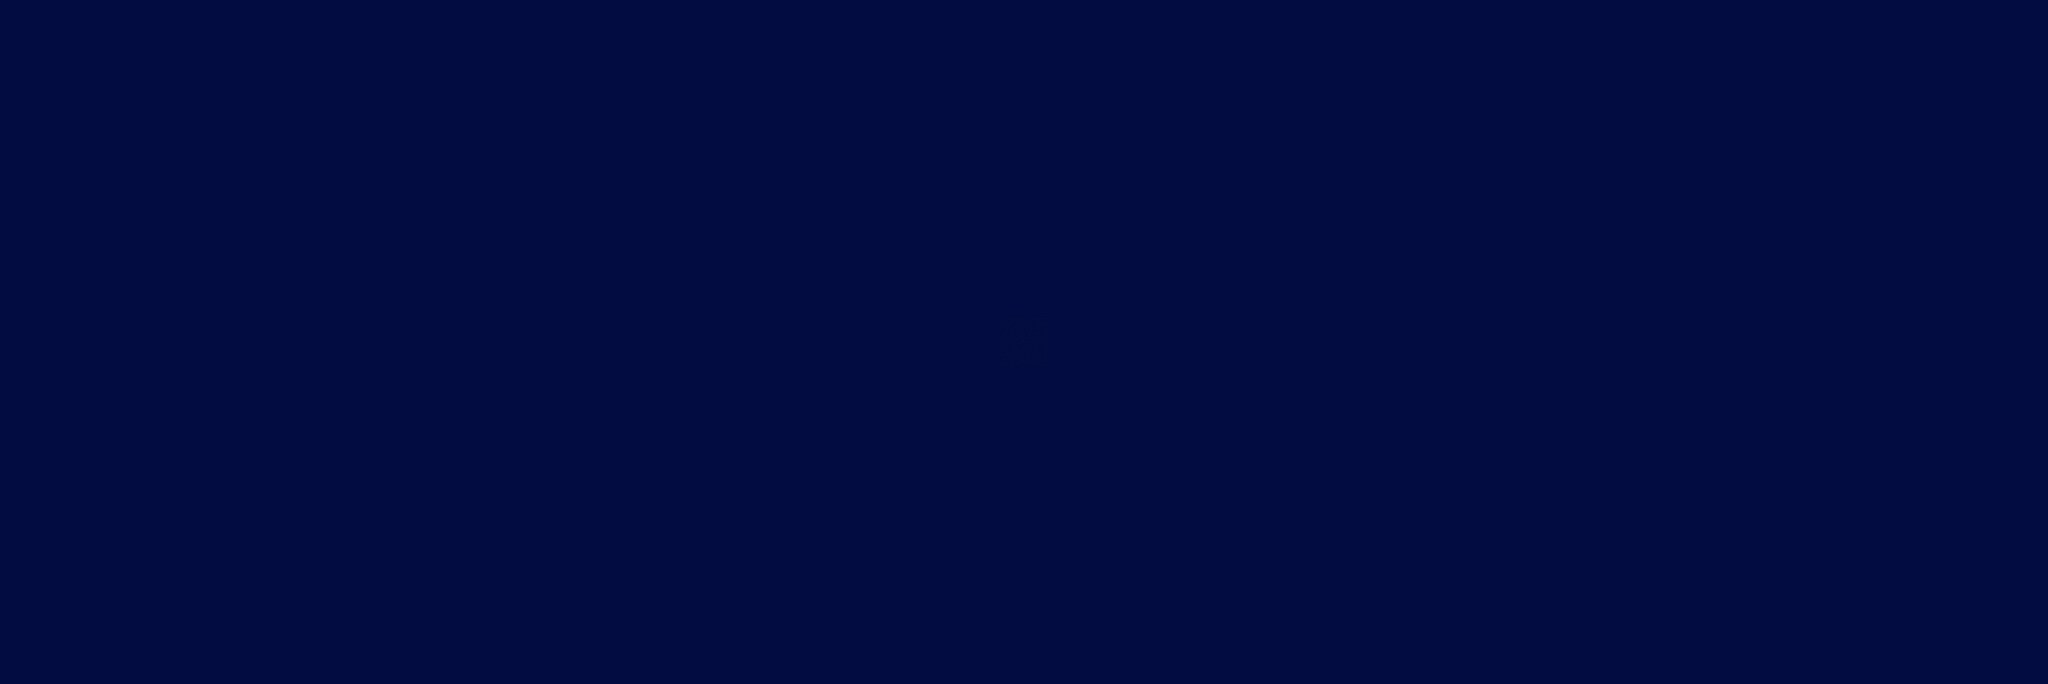 Secret Invasion - Featured Content Banner (DEFAULT BLUE SLIM BANNER WITH SEPARATE LOGO)